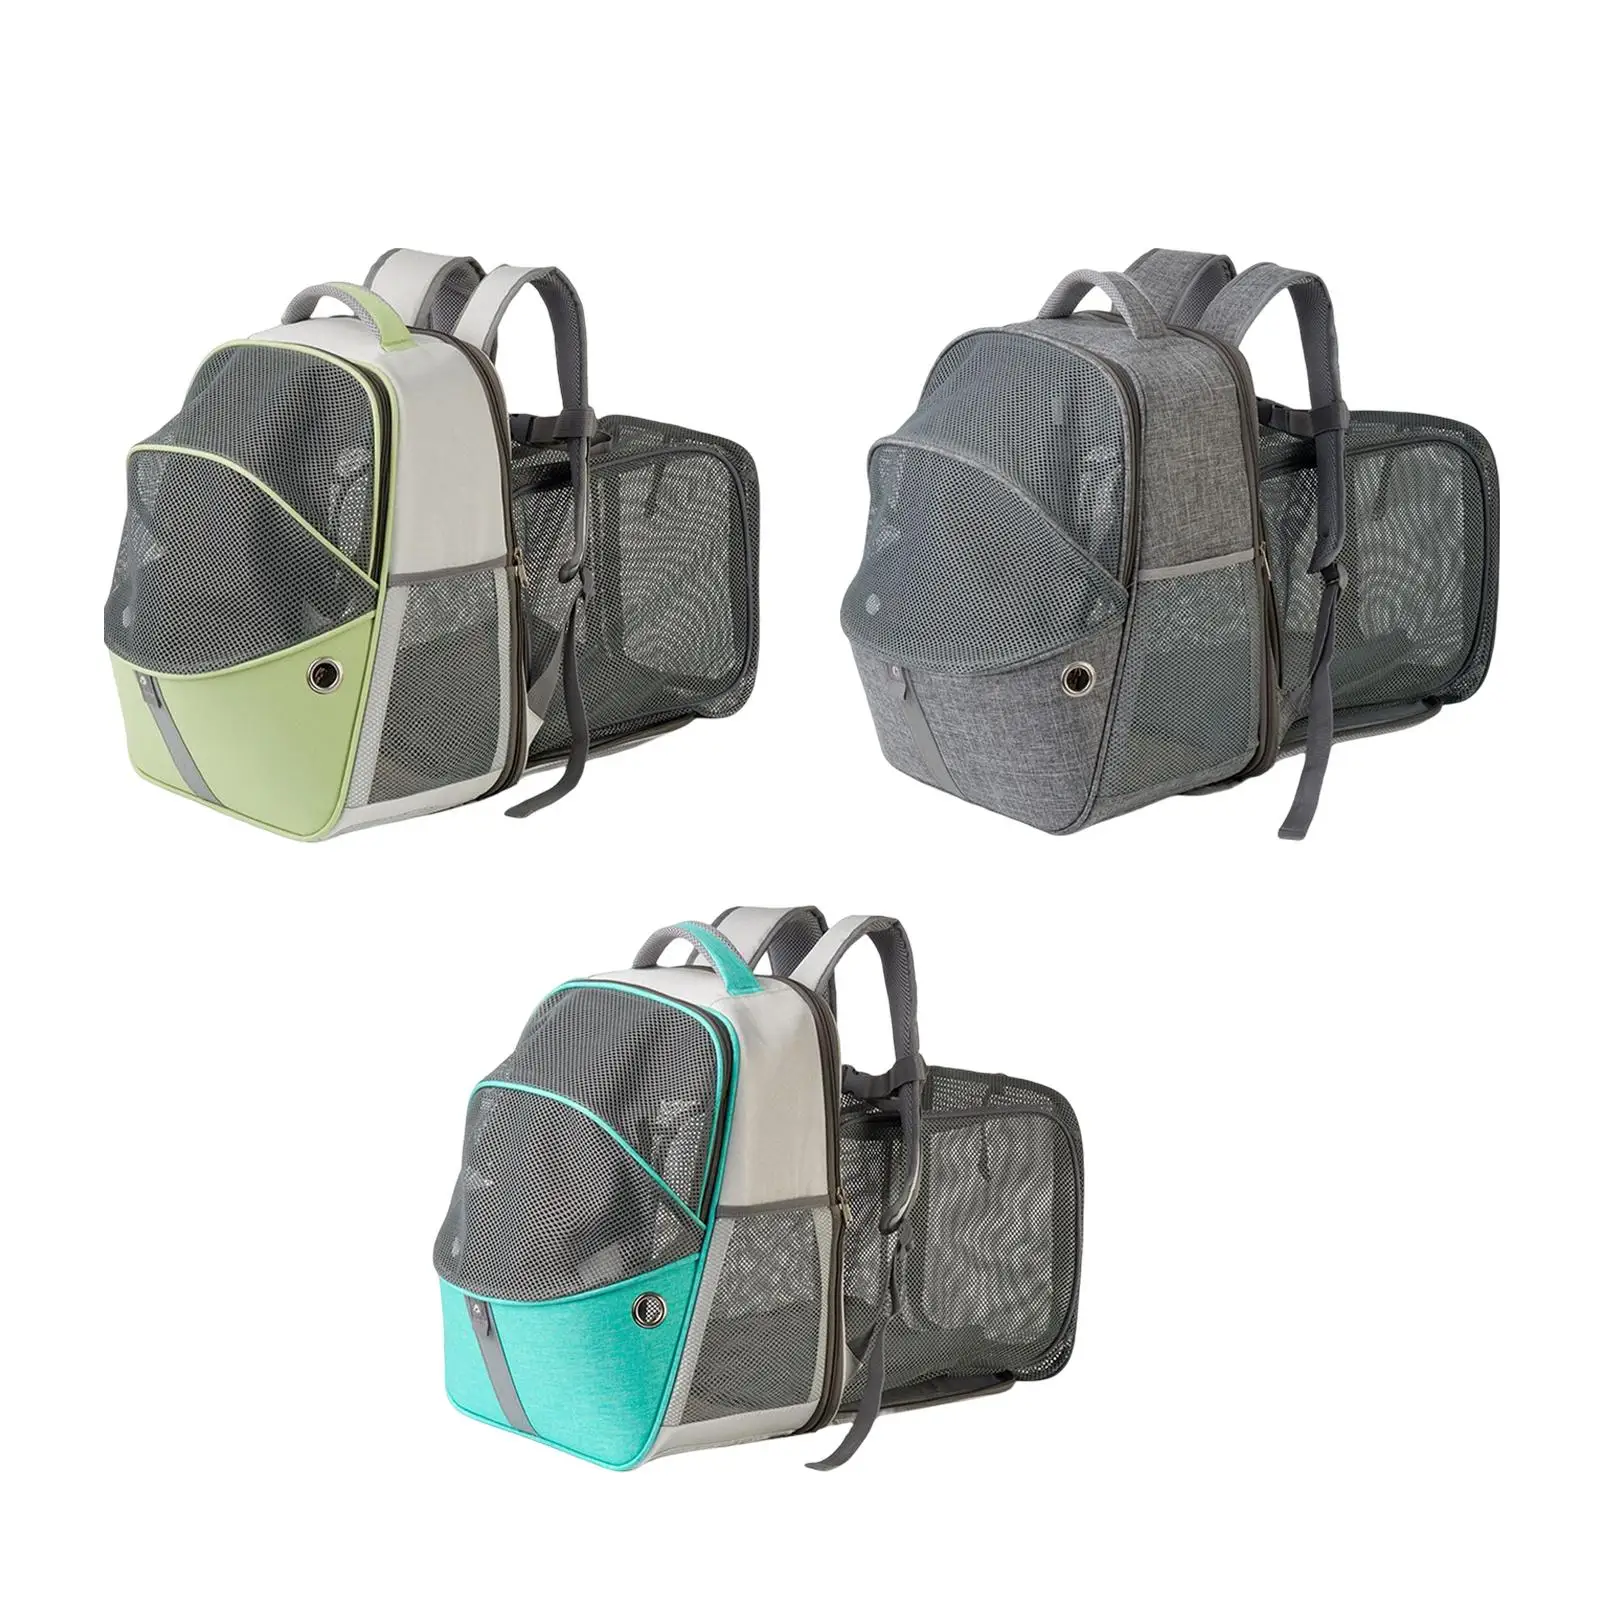 Foldable Cat Backpack Expandable Travel Bag Breathable Pet Carrier Shoulder Bag for Outdoor Traveling Hiking Cat Puppy